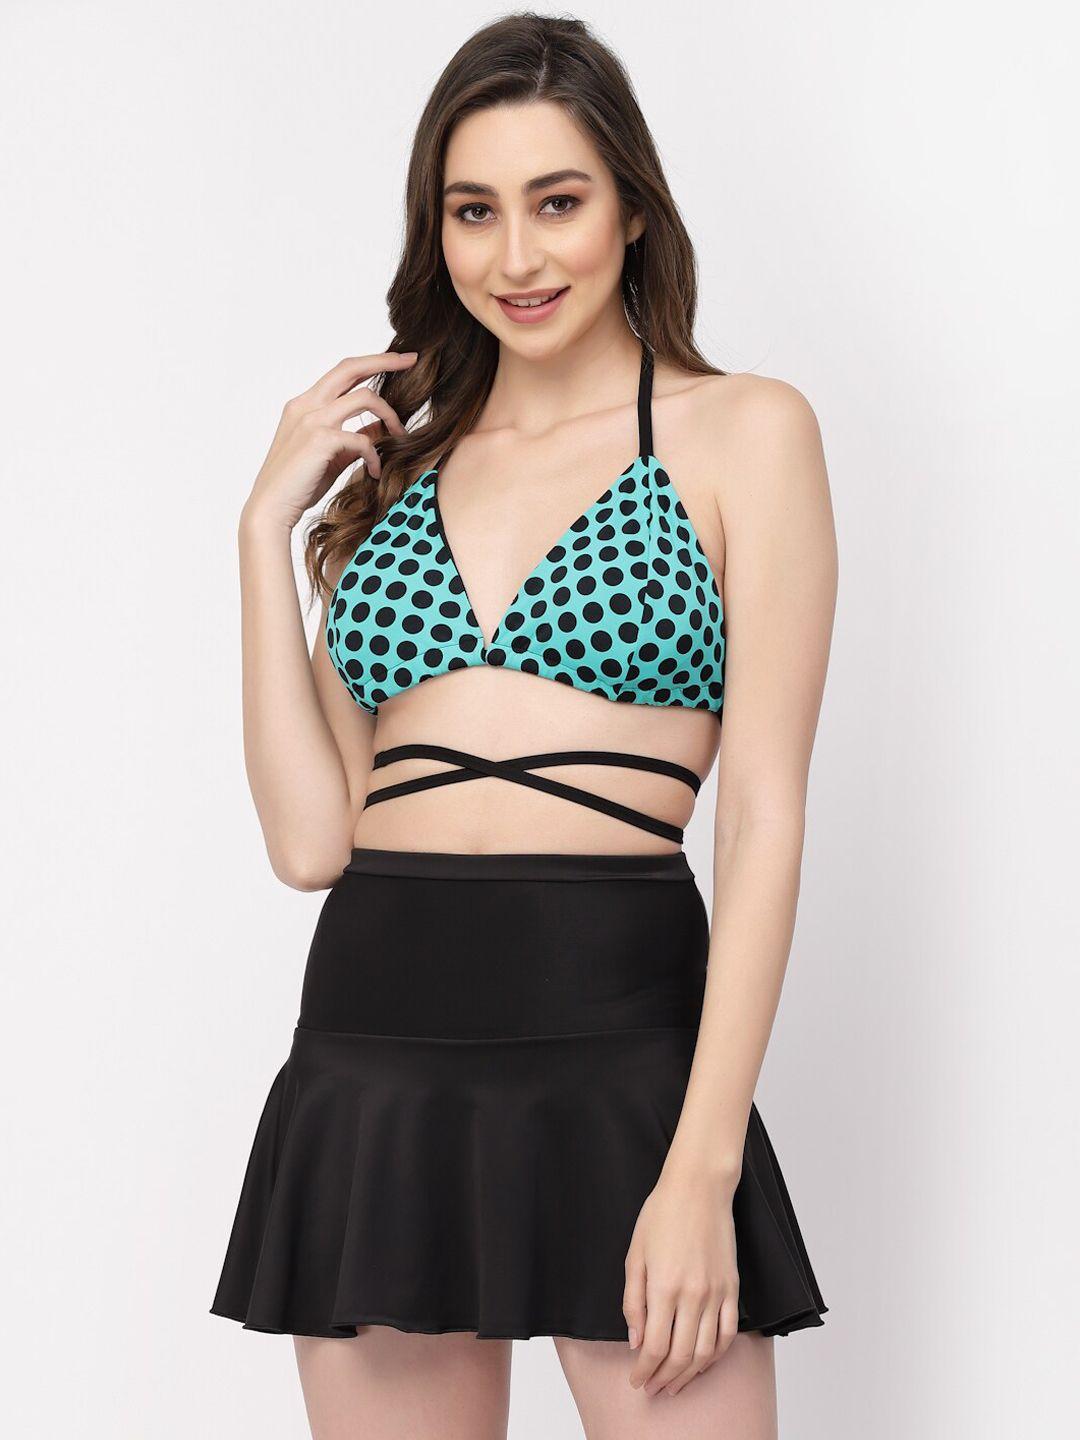 cukoo women polka dot-printed padded top & skirt swim set